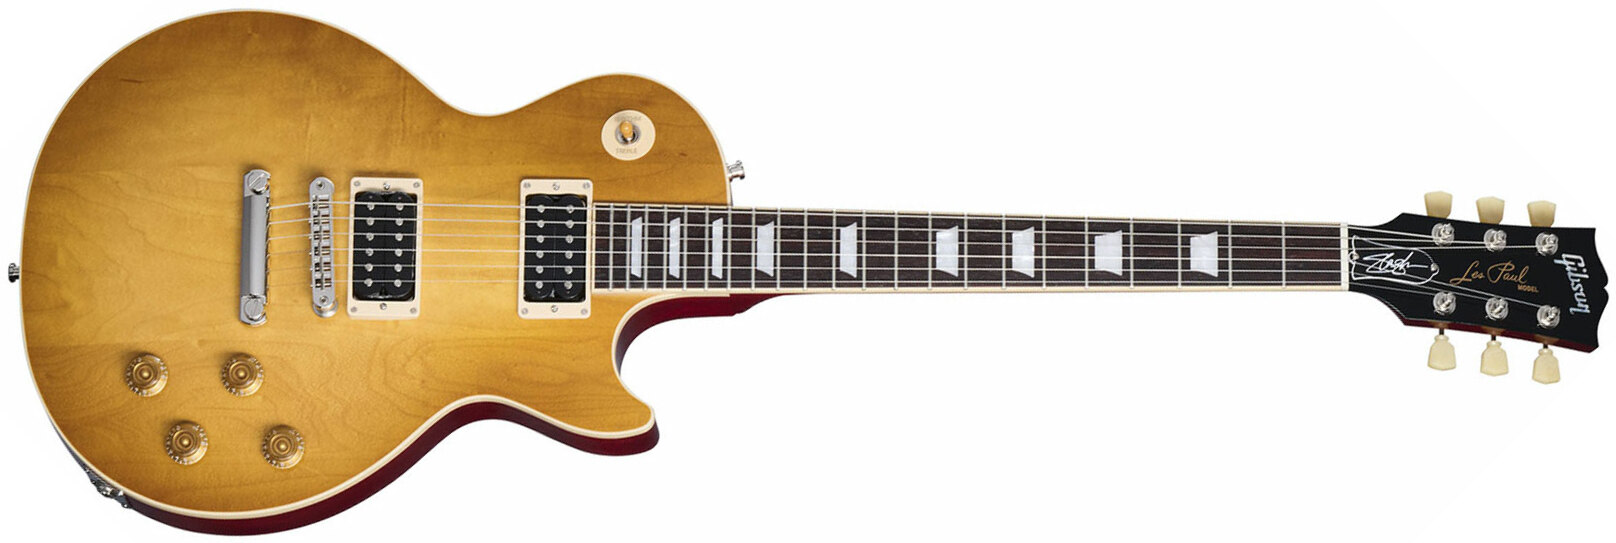 Gibson Slash Les Paul Standard Jessica Signature 2h Ht Rw - Honey Burst With Red Back - Guitarra eléctrica de corte único. - Main picture